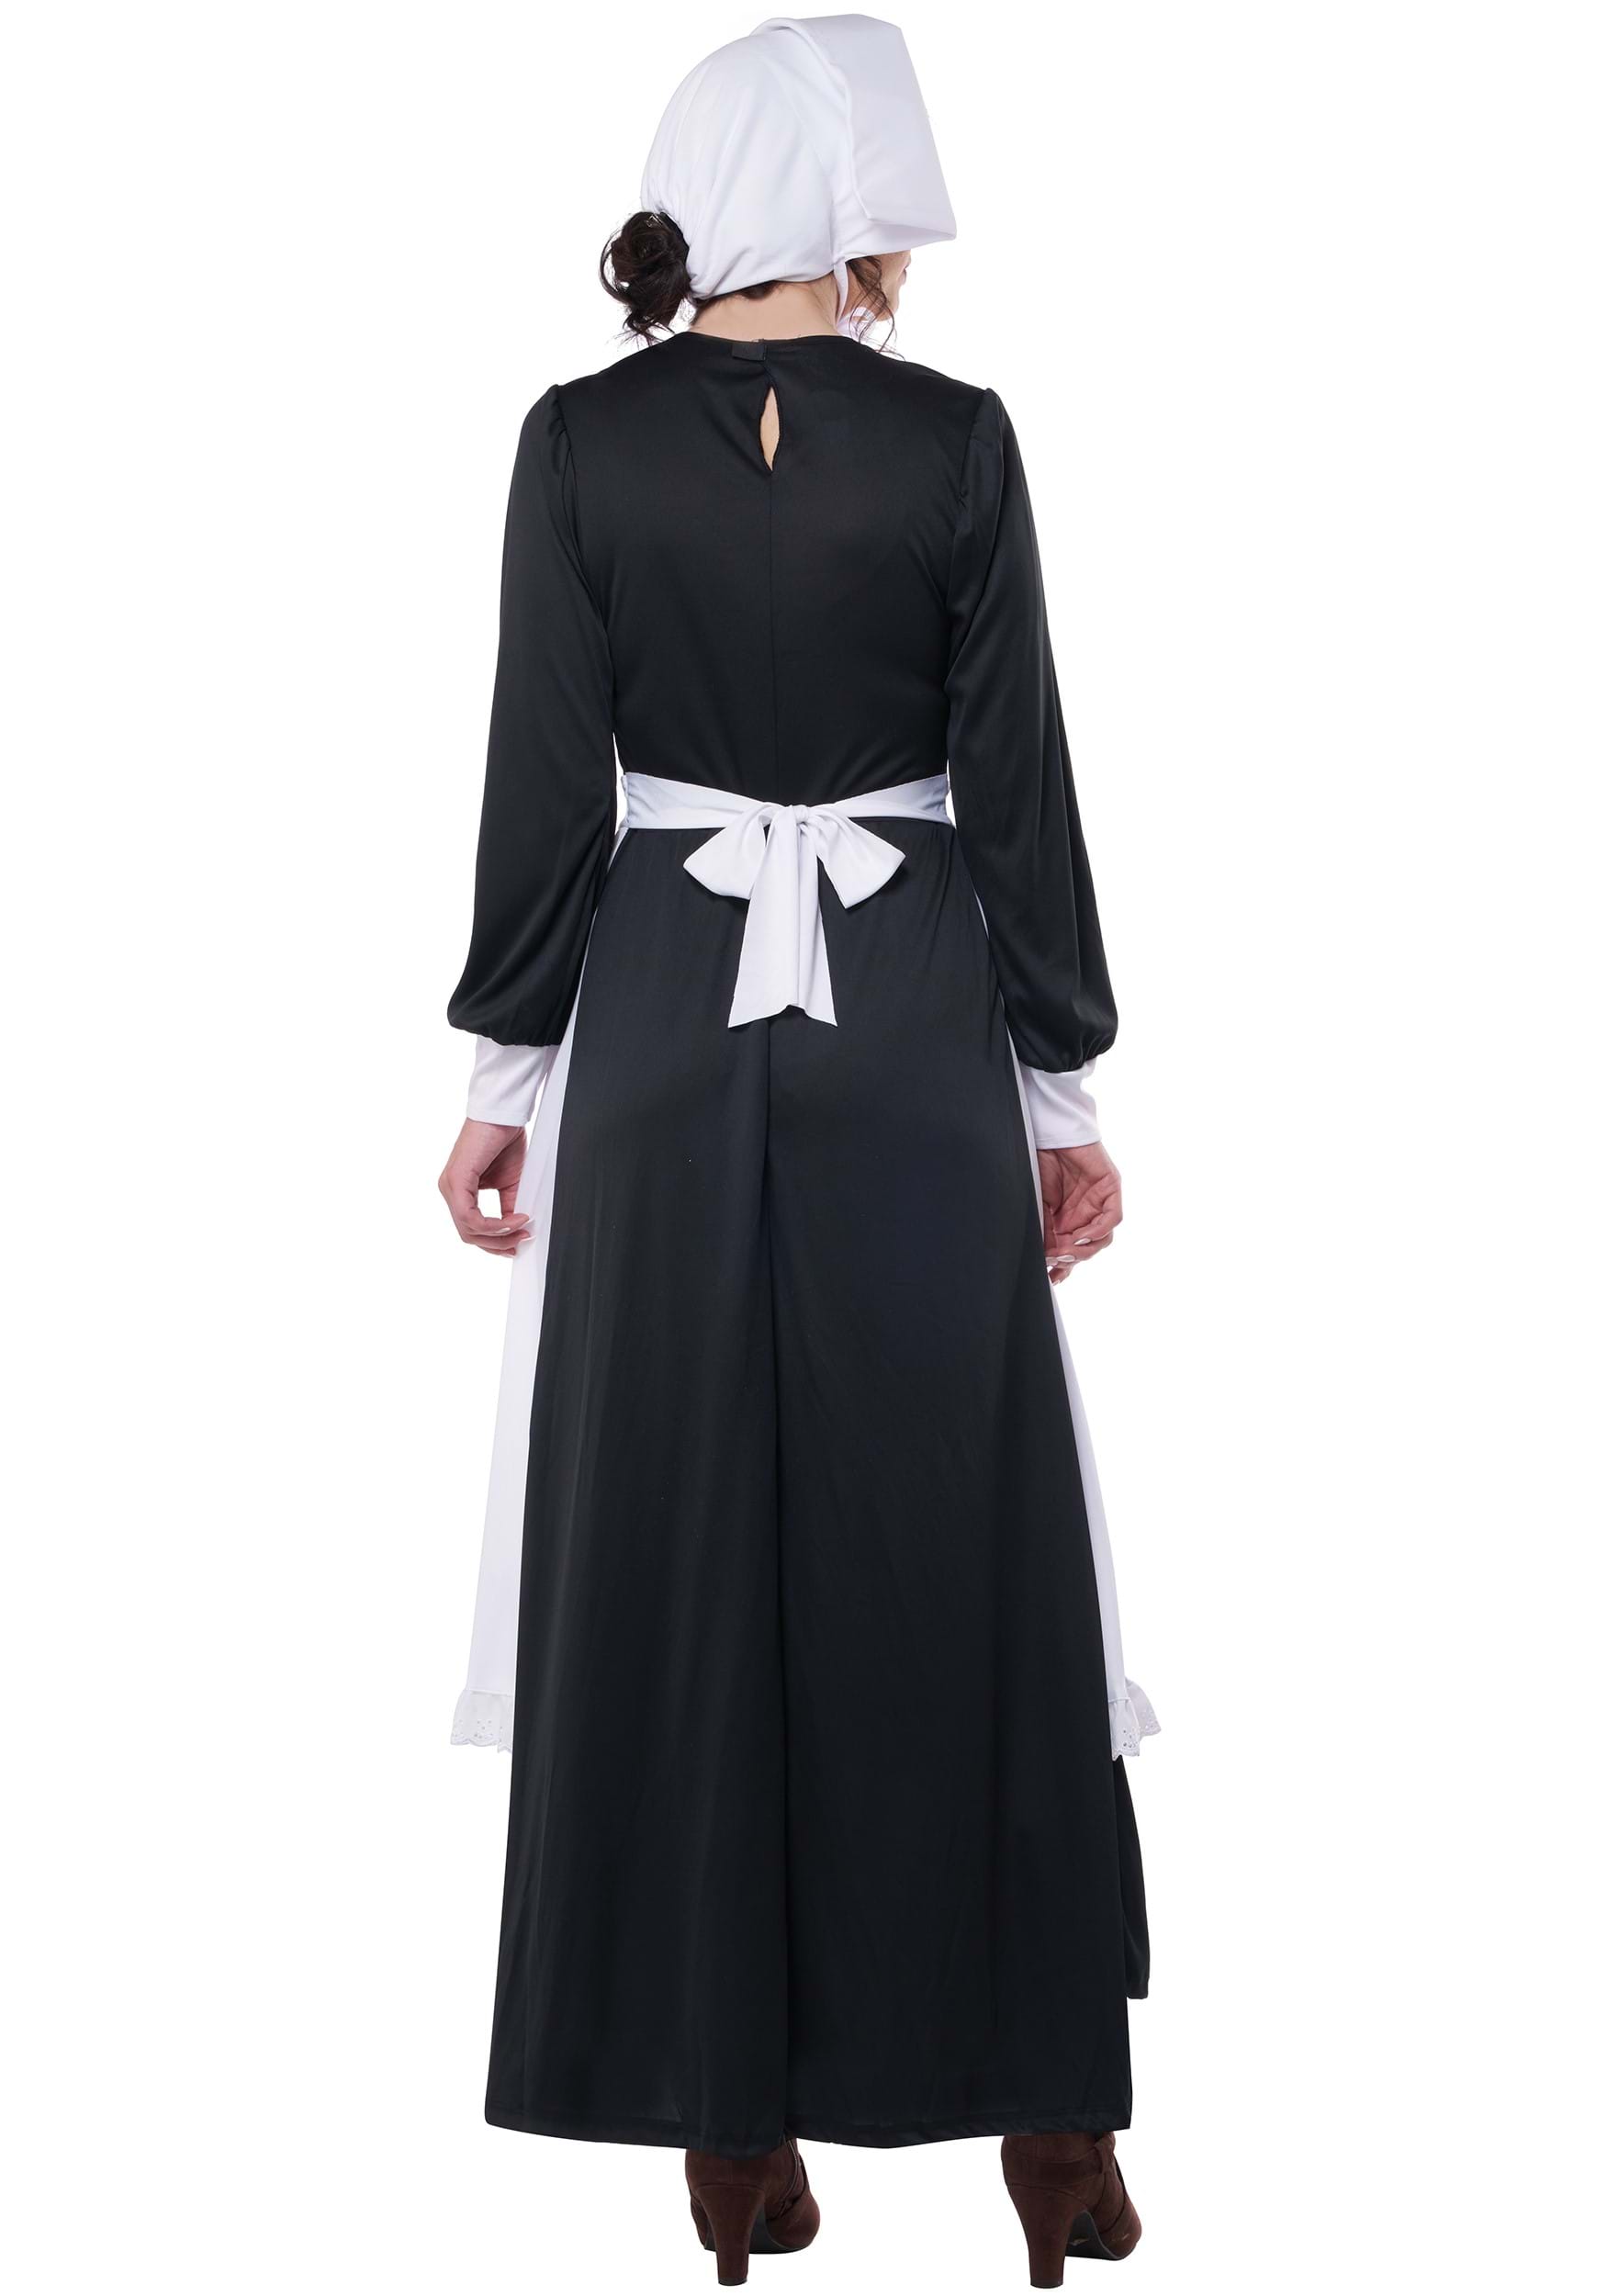 Pilgrim Costume For Women